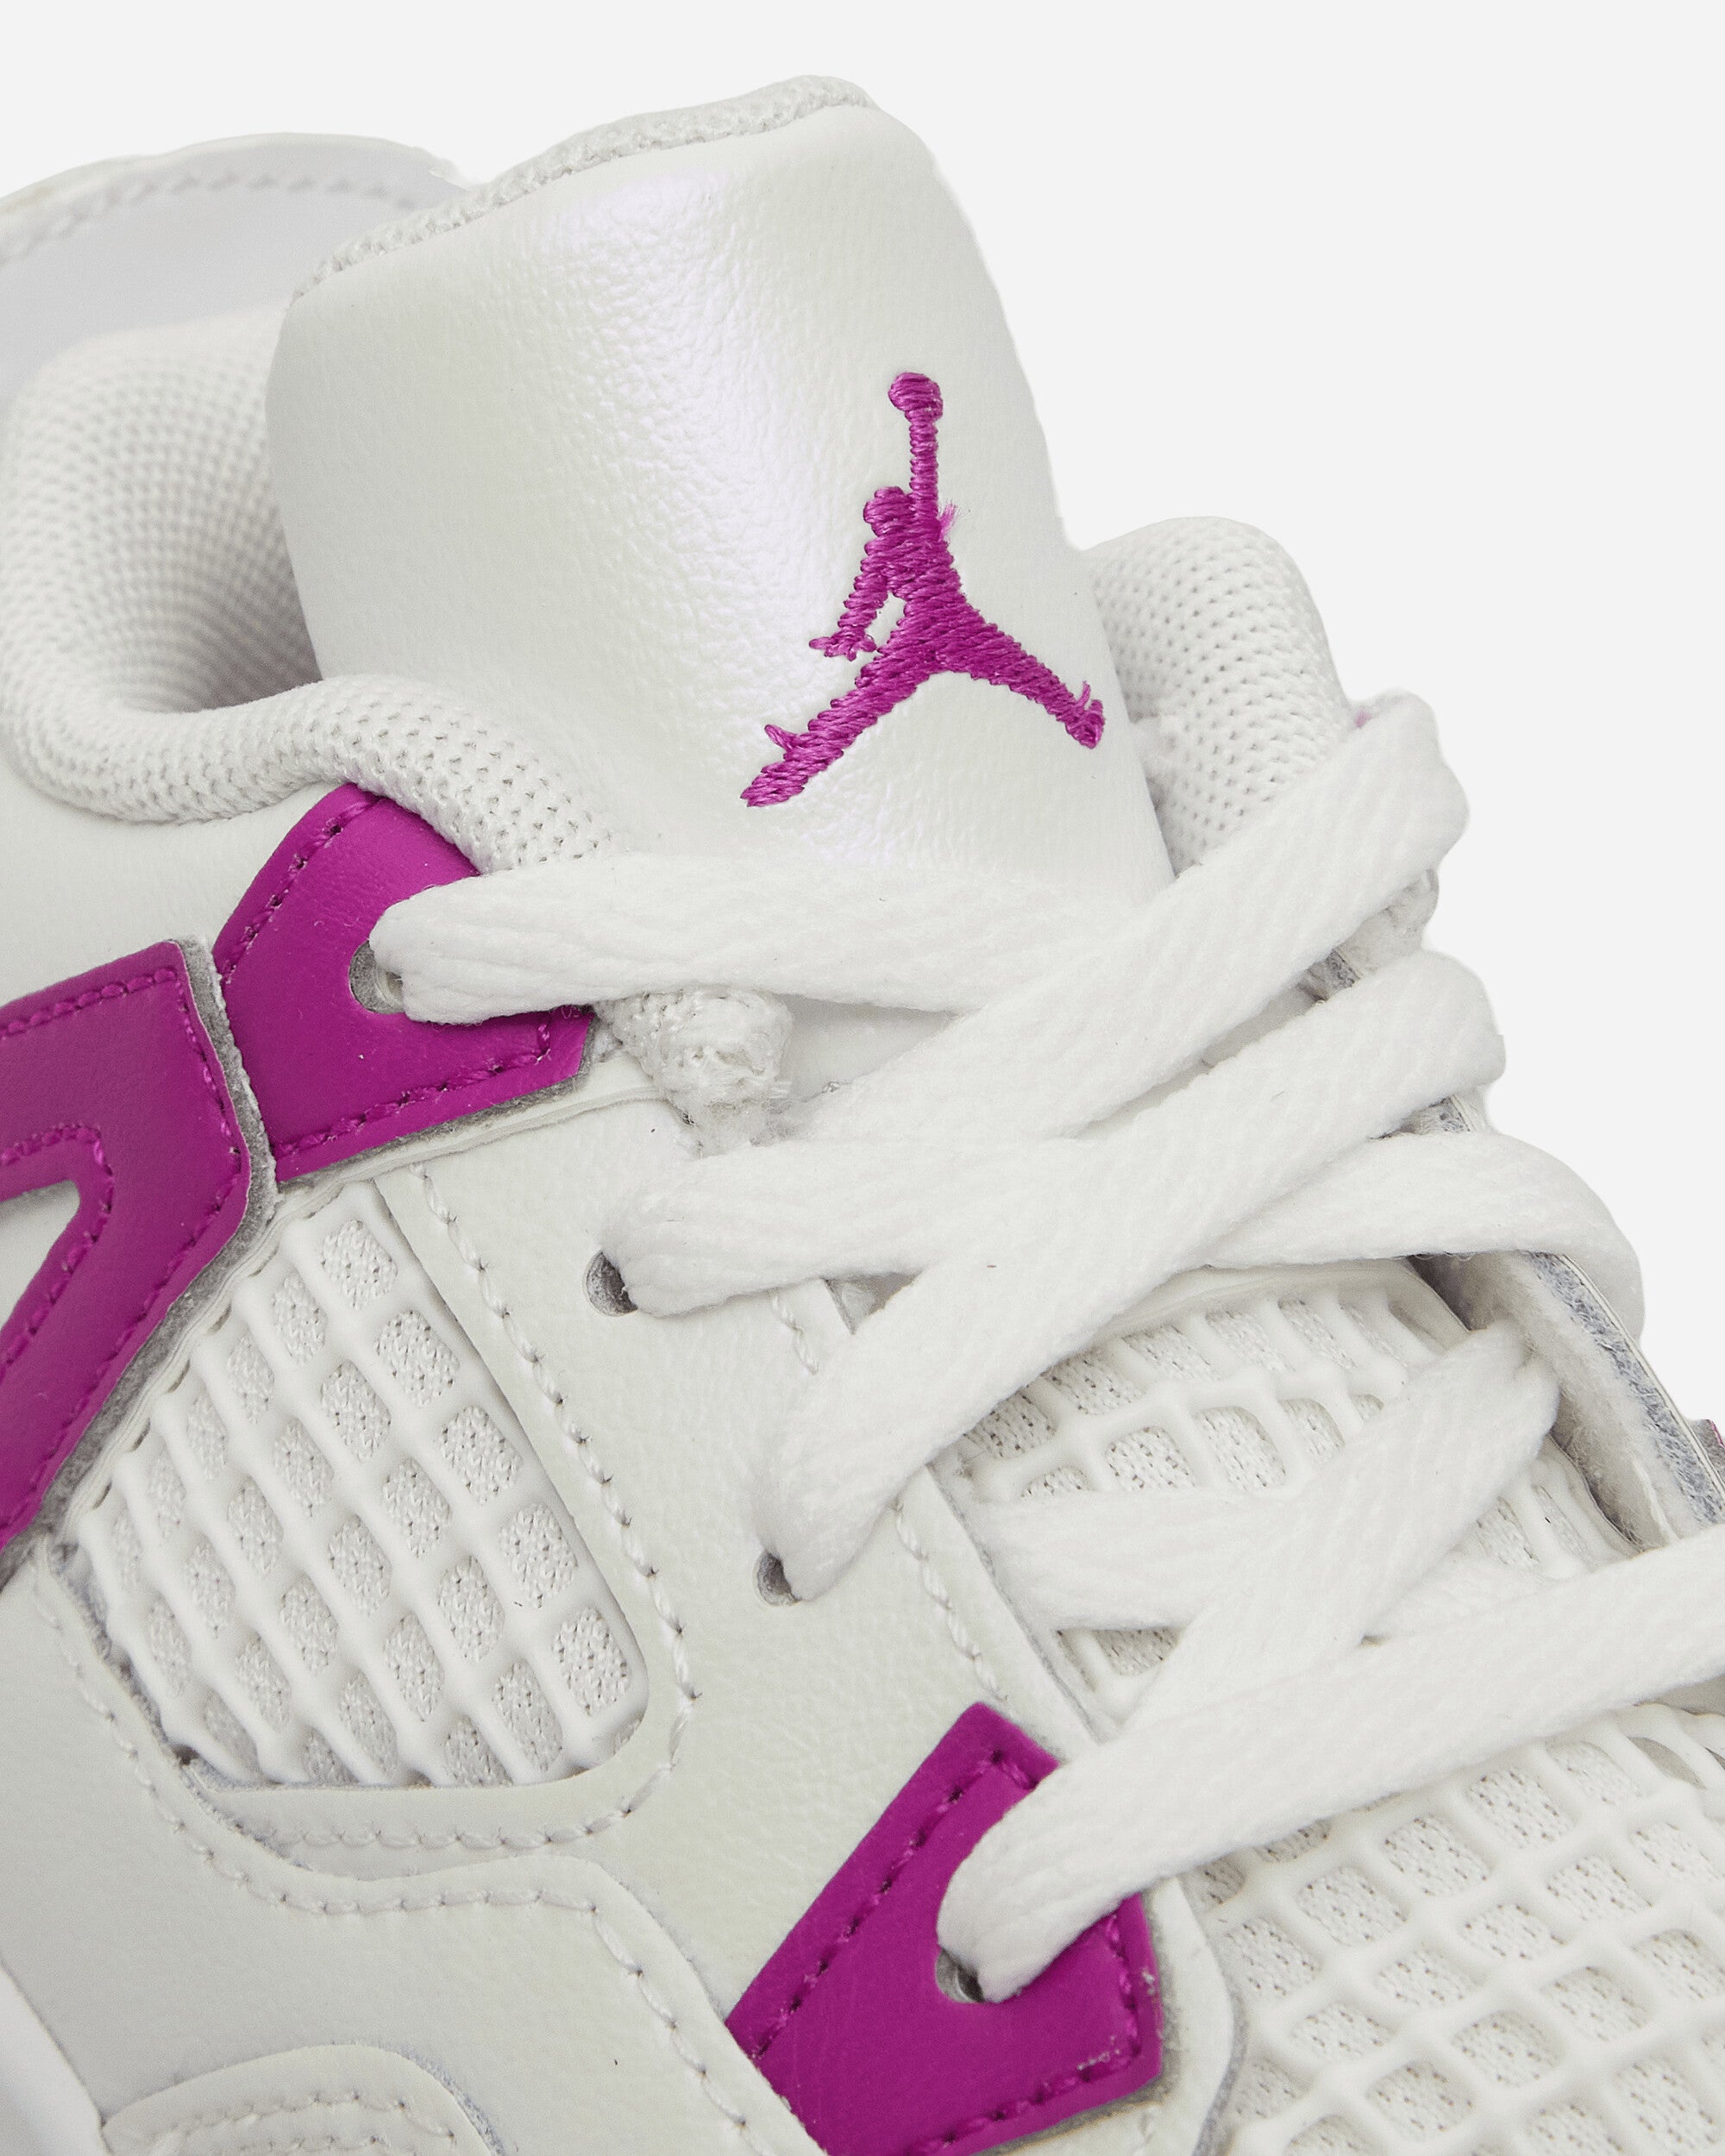 Nike Jordan Jordan 4 Retro (Td) White/Hyper Violet Sneakers Mid FQ1313-151